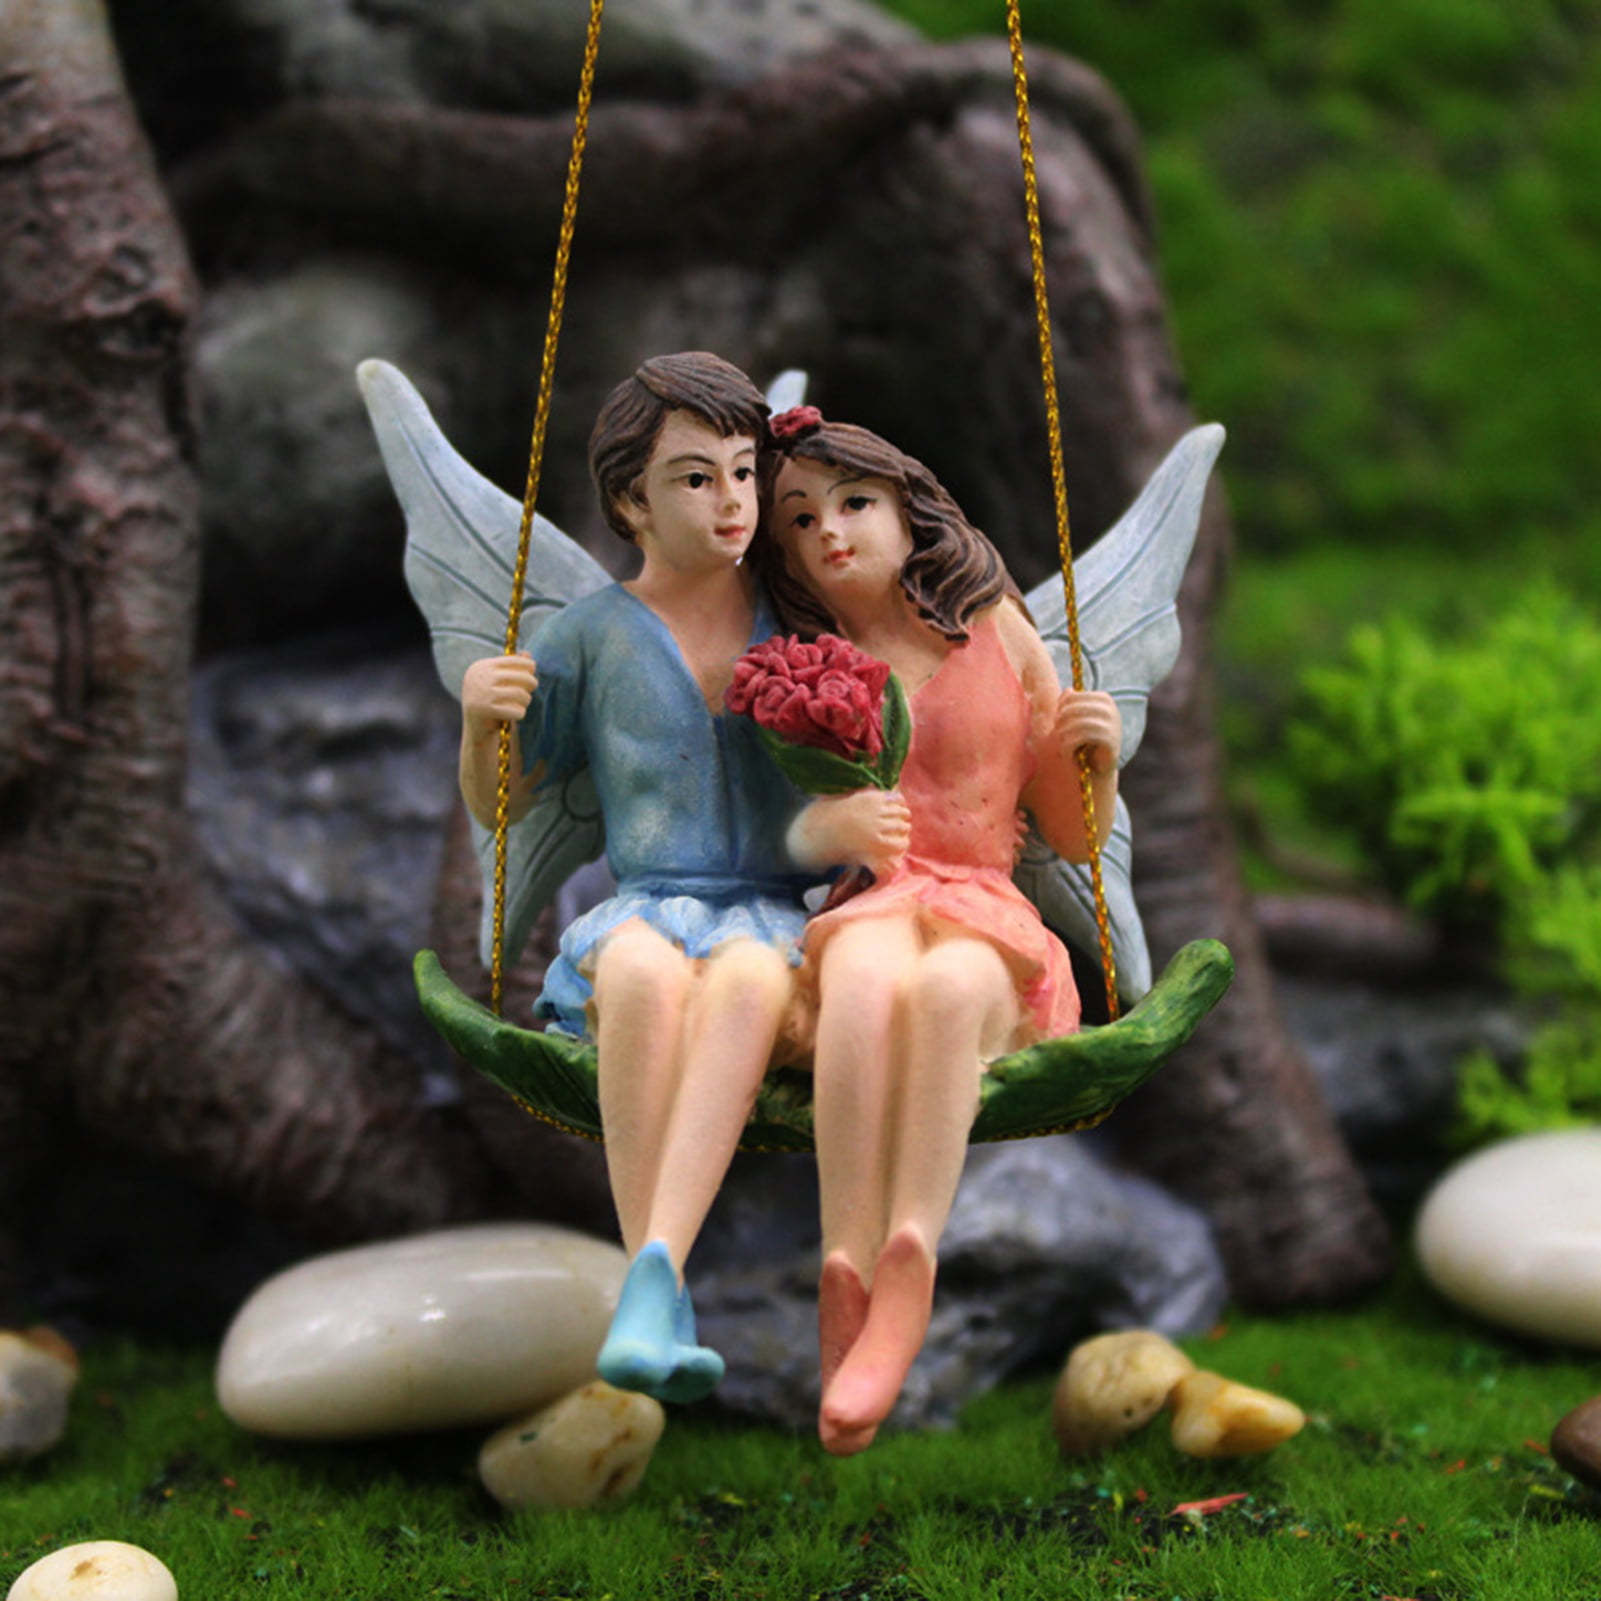 1X mini rabbit craft figurine garden ornaments miniature fairy garden decors DIJ